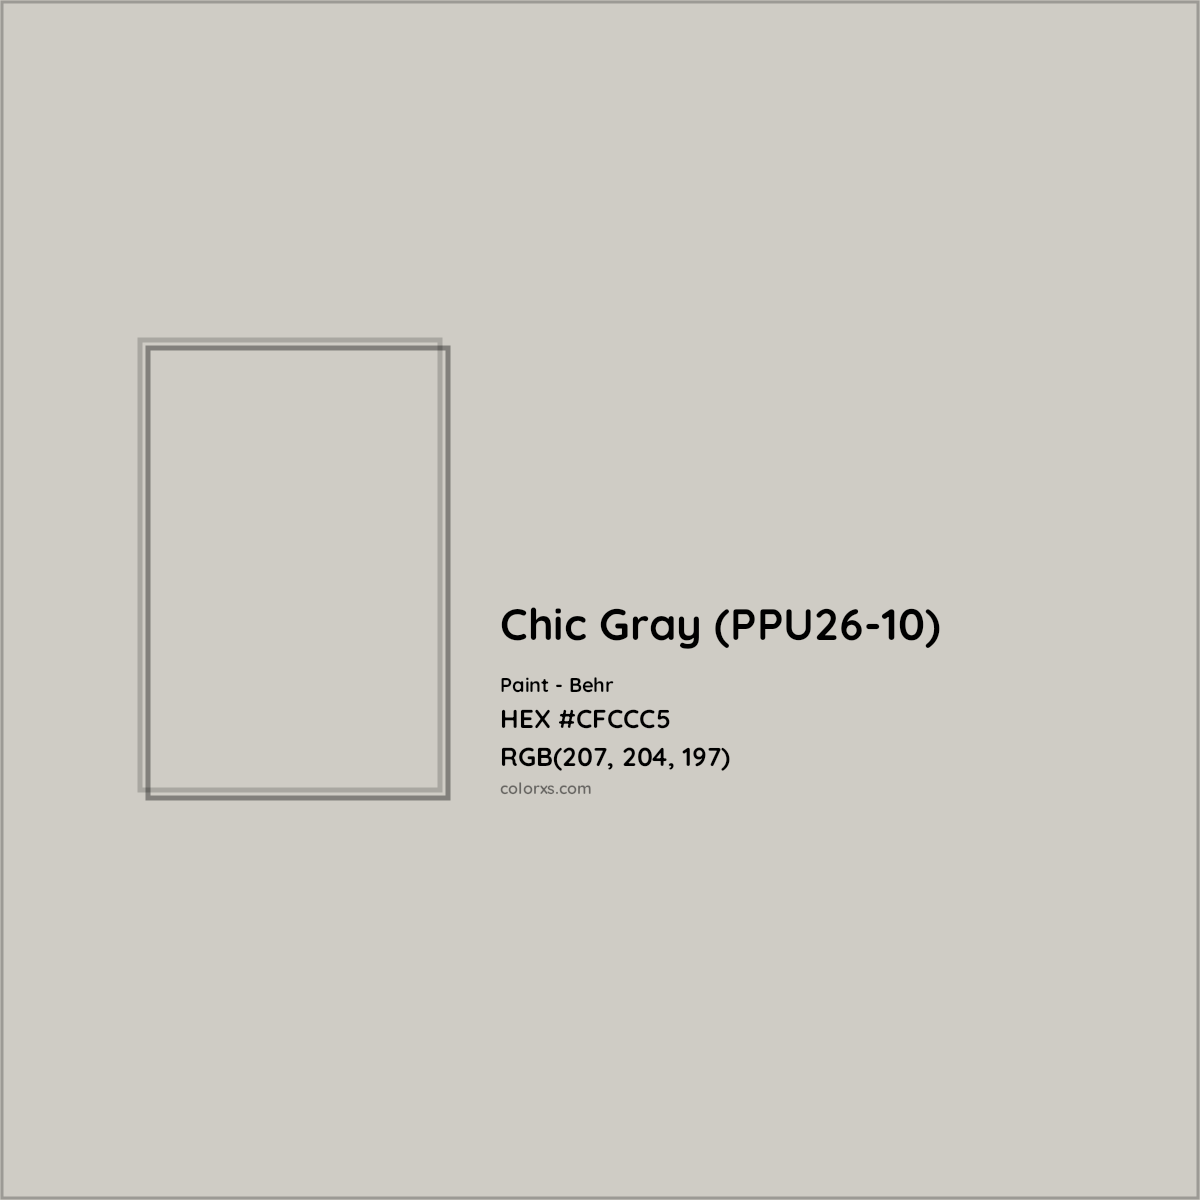 HEX #CFCCC5 Chic Gray (PPU26-10) Paint Behr - Color Code